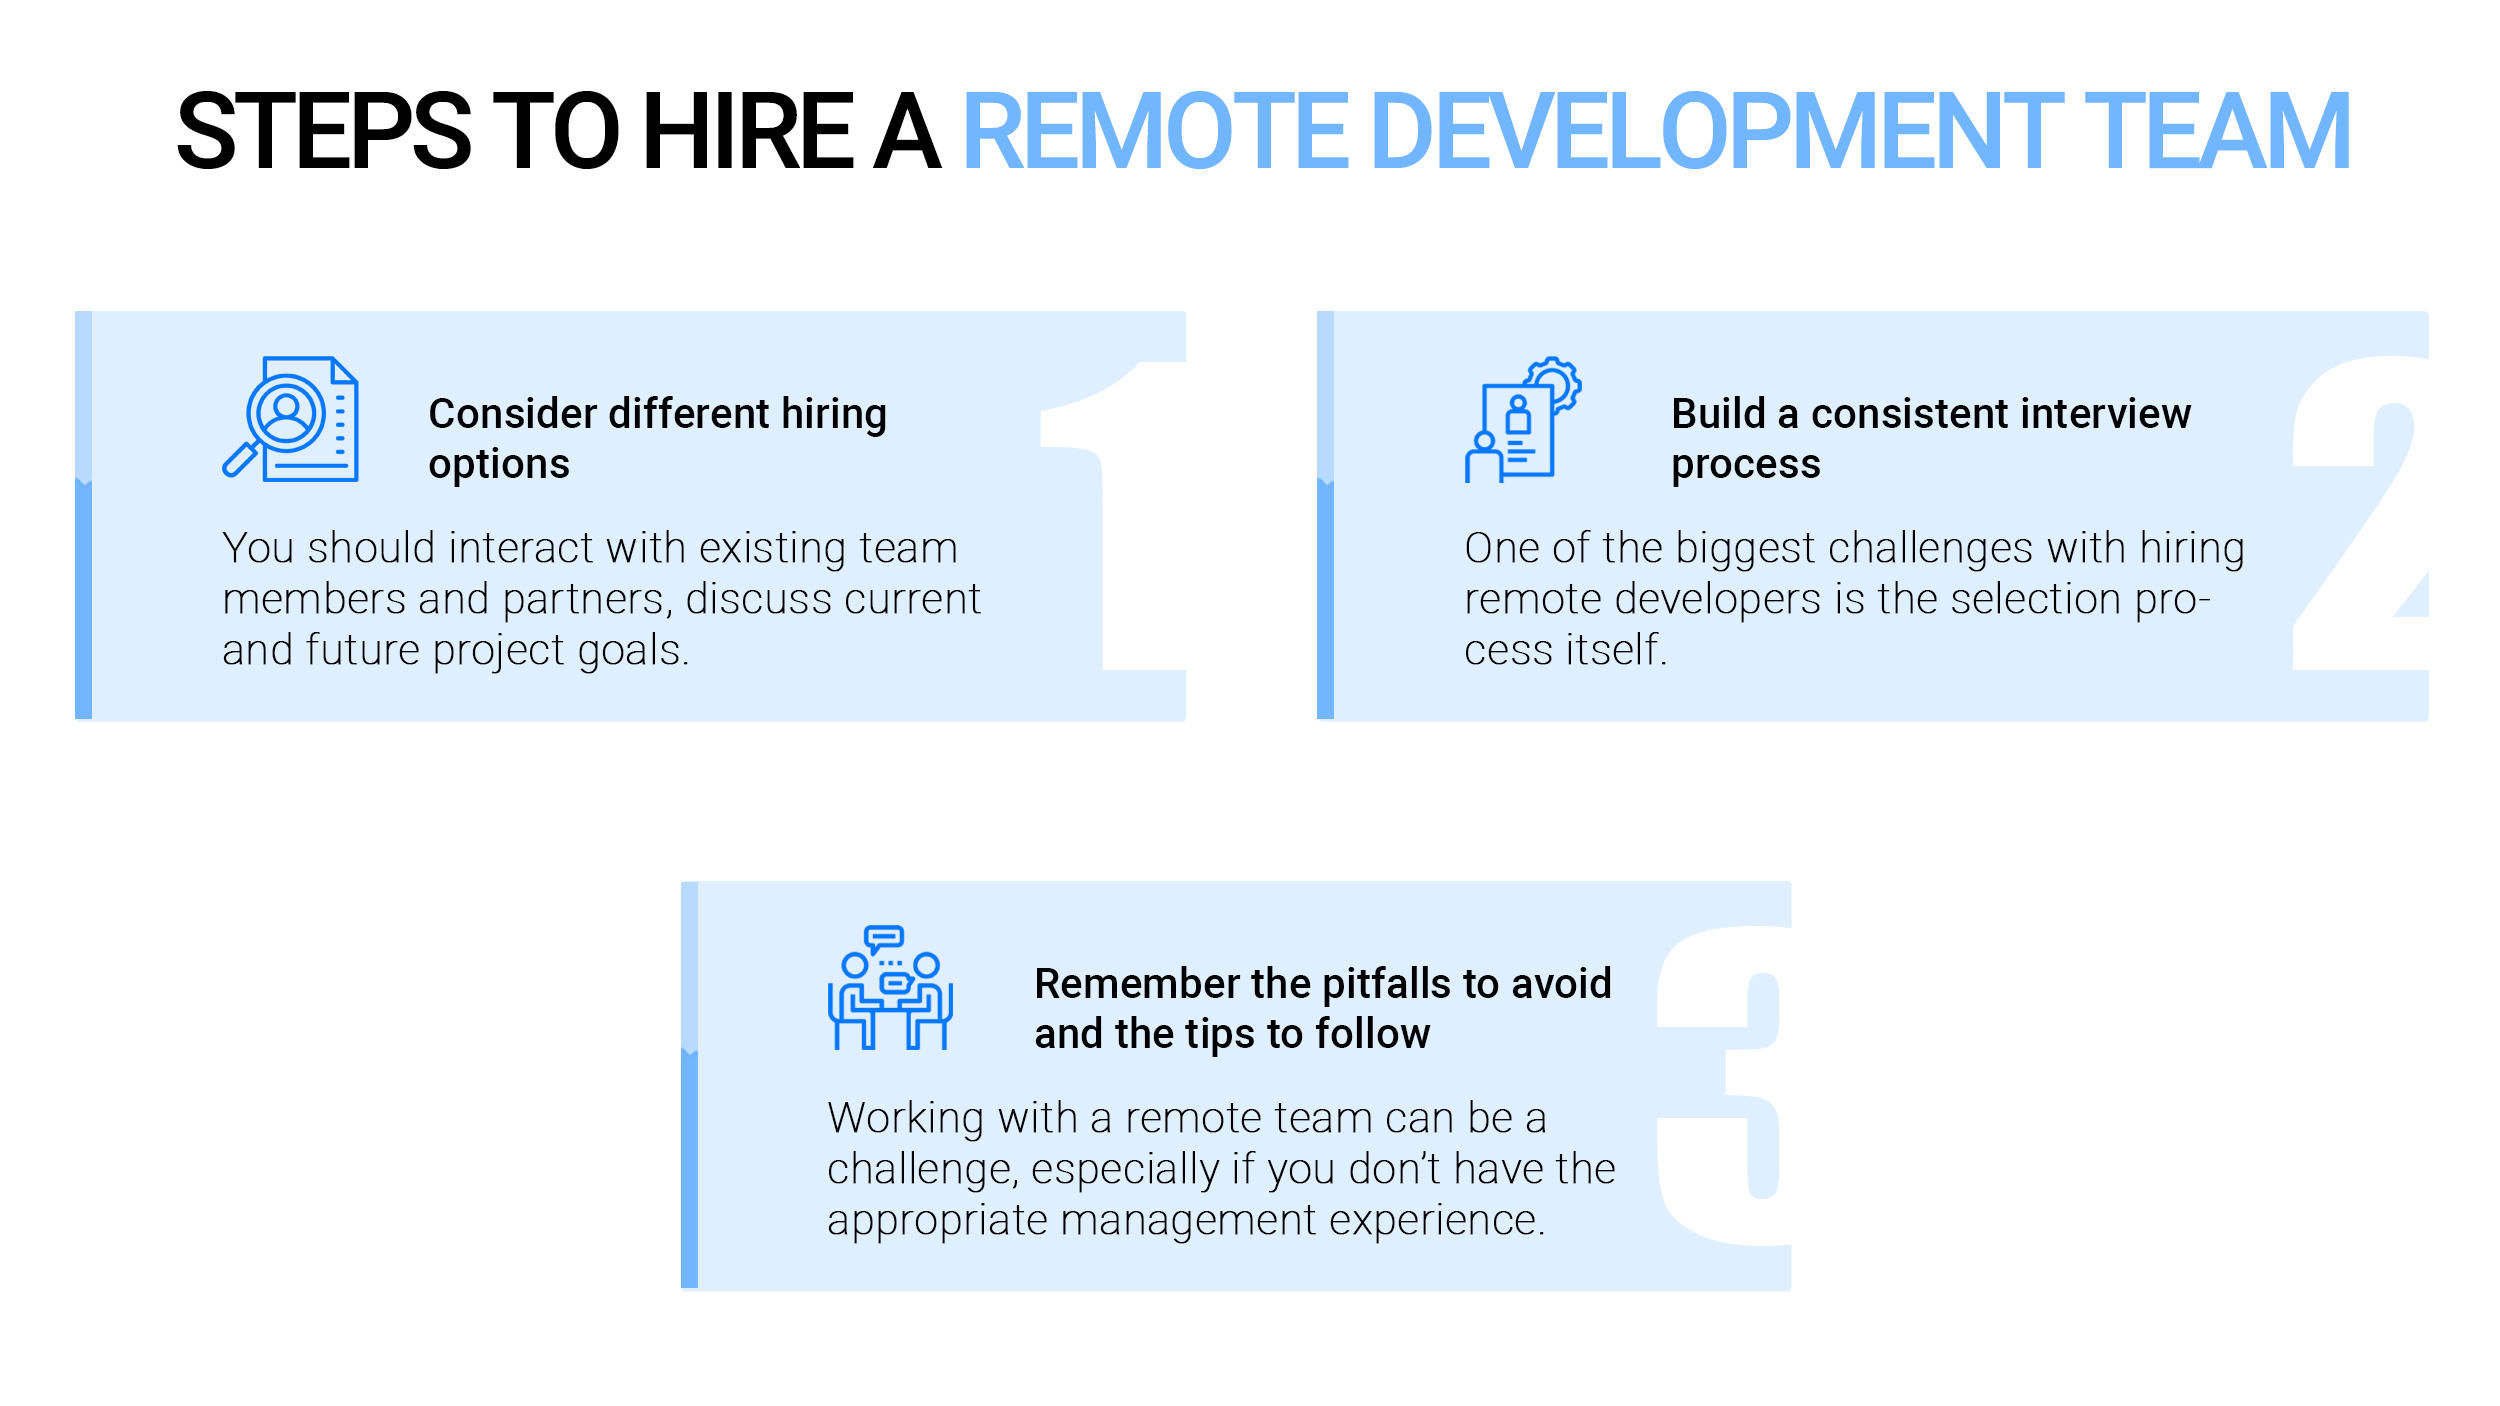 Steps to hire a remote development team